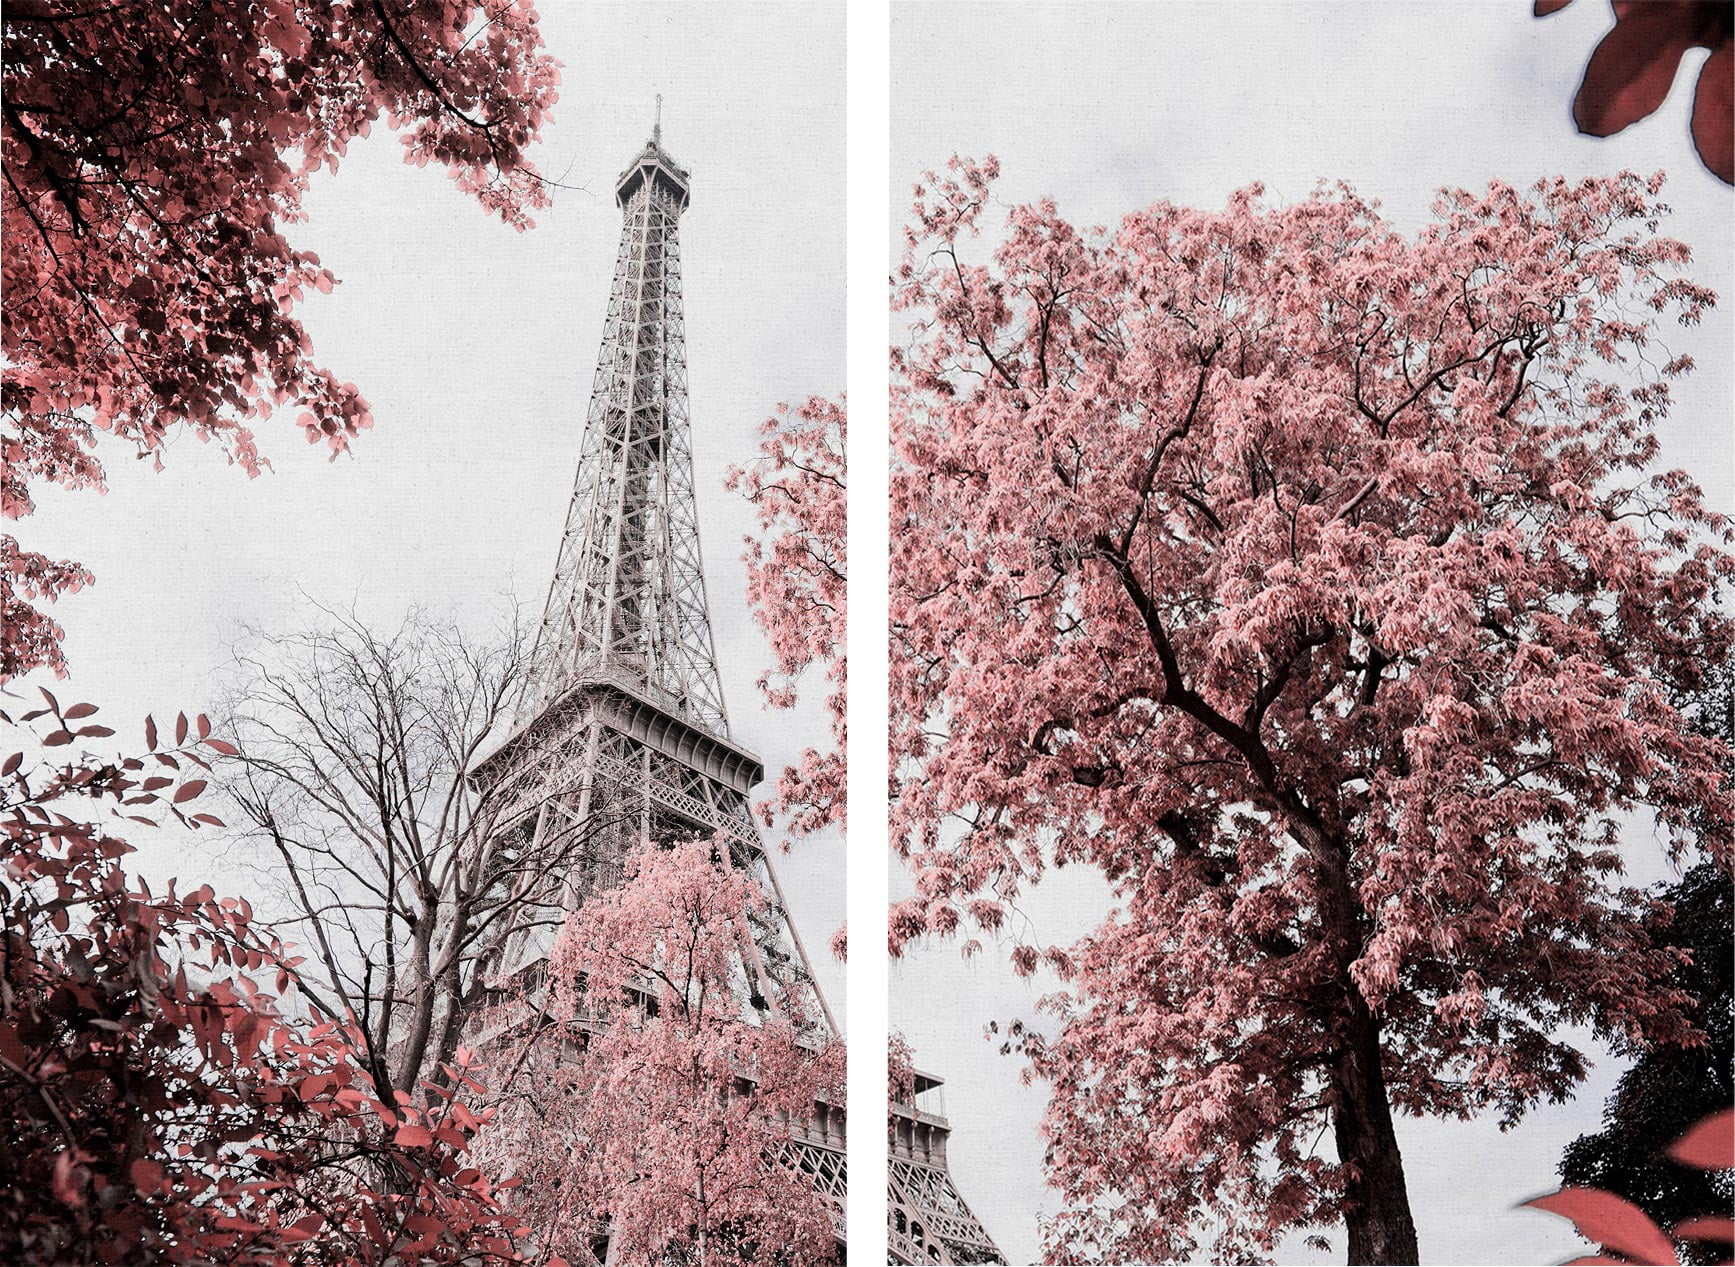 Kit 2 quadros retangulares - Torre Eiffel e folhas coloridas